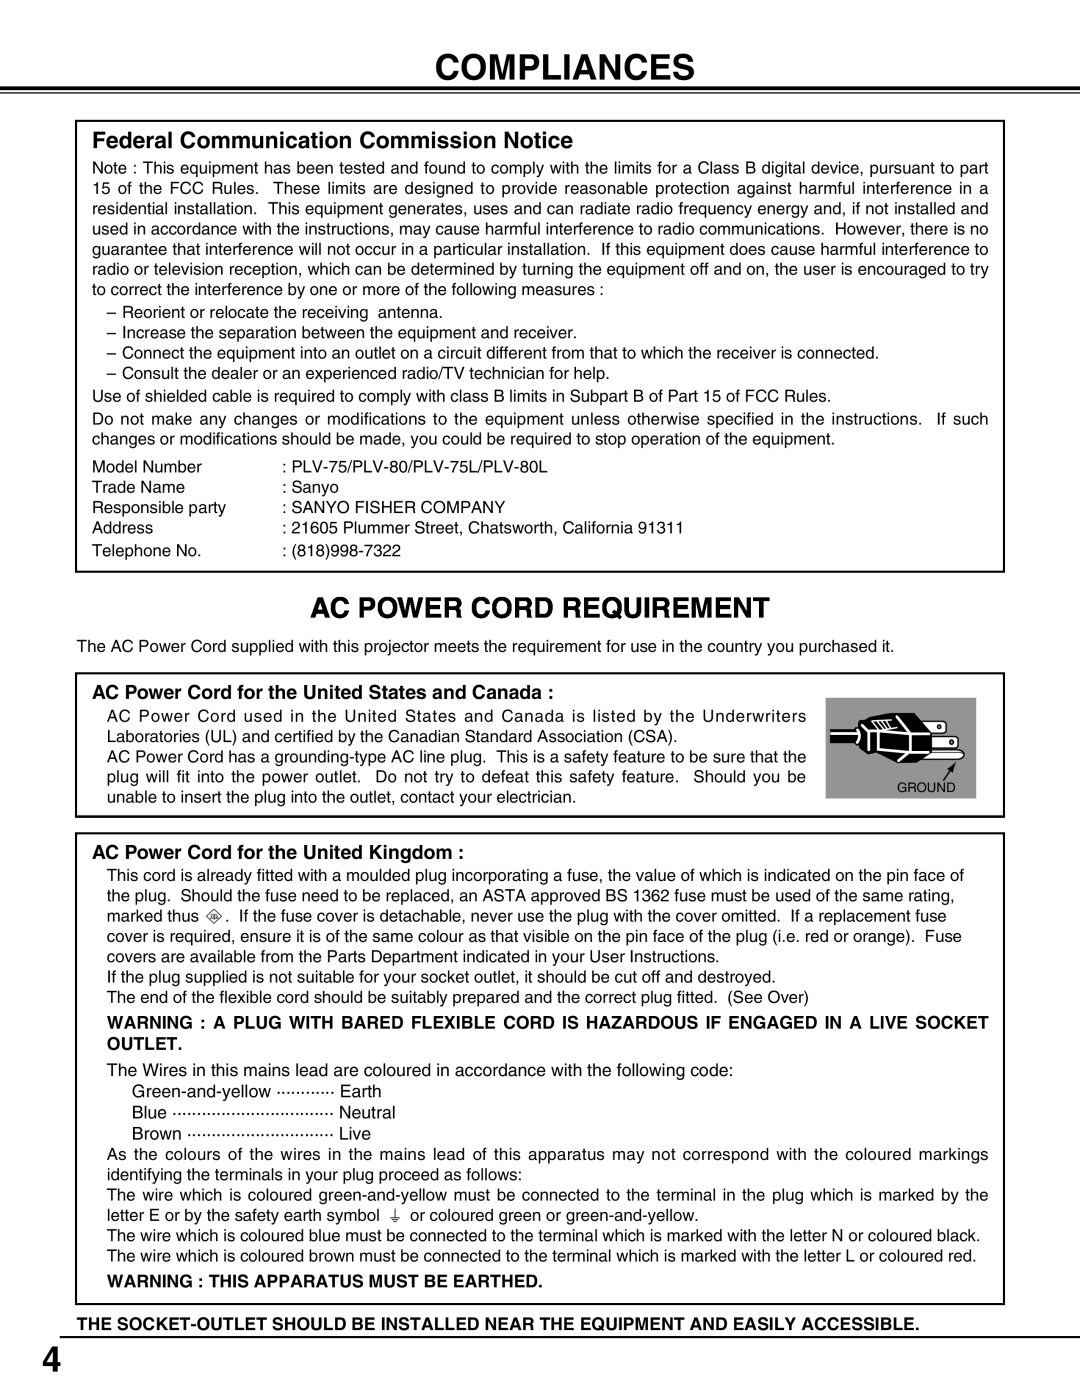 Sanyo PLV75L/PLV-80L, PLV-75/PLV-80 Compliances, Ac Power Cord Requirement, Federal Communication Commission Notice 